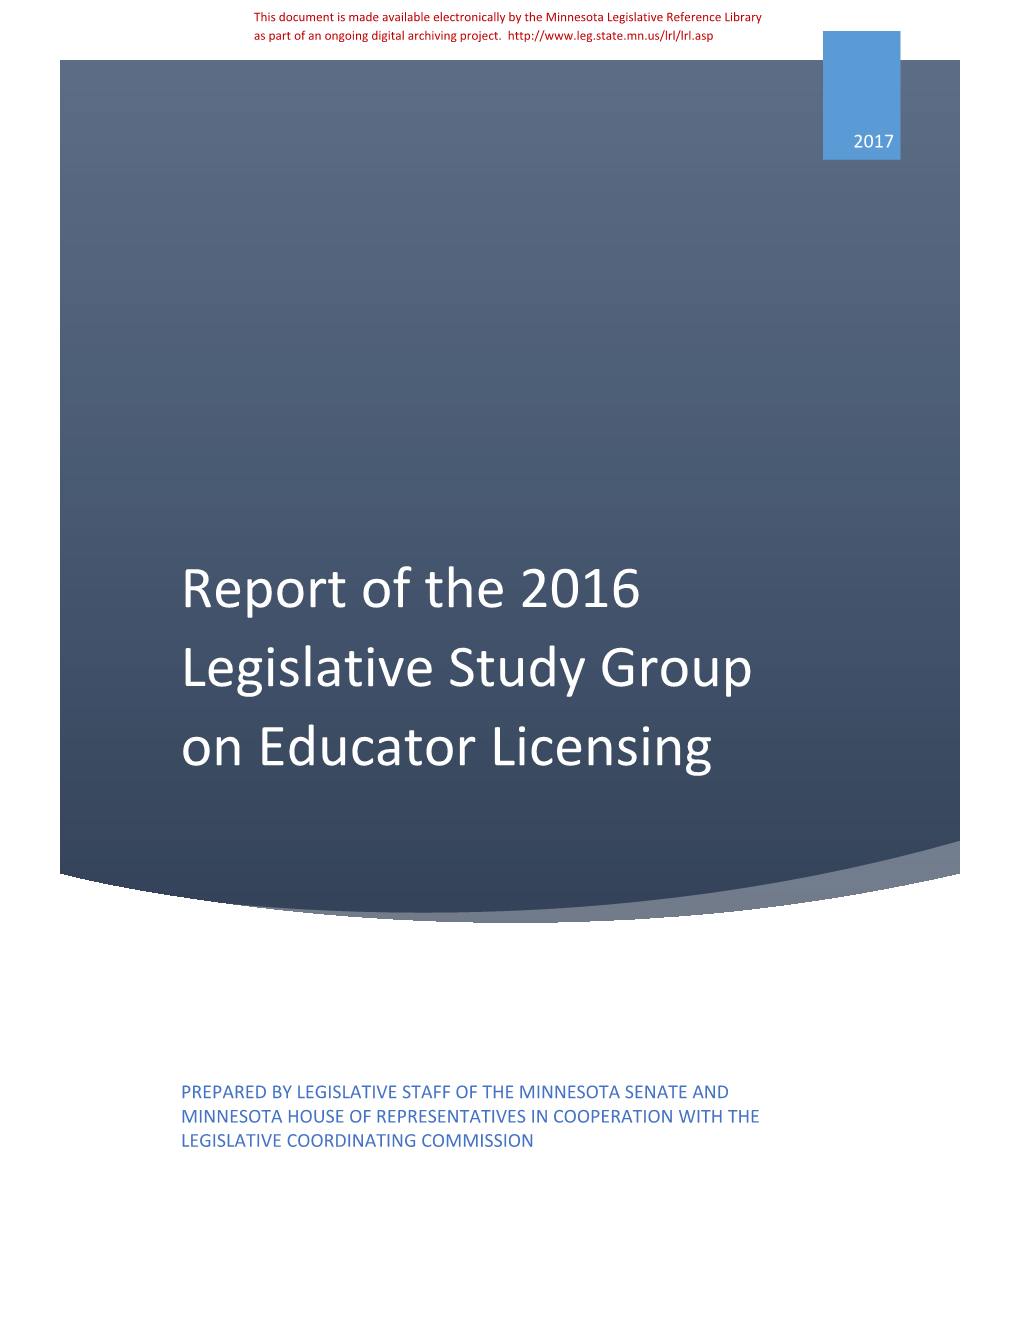 Report of the 2016 Legislative Study Group on Educator Licensing